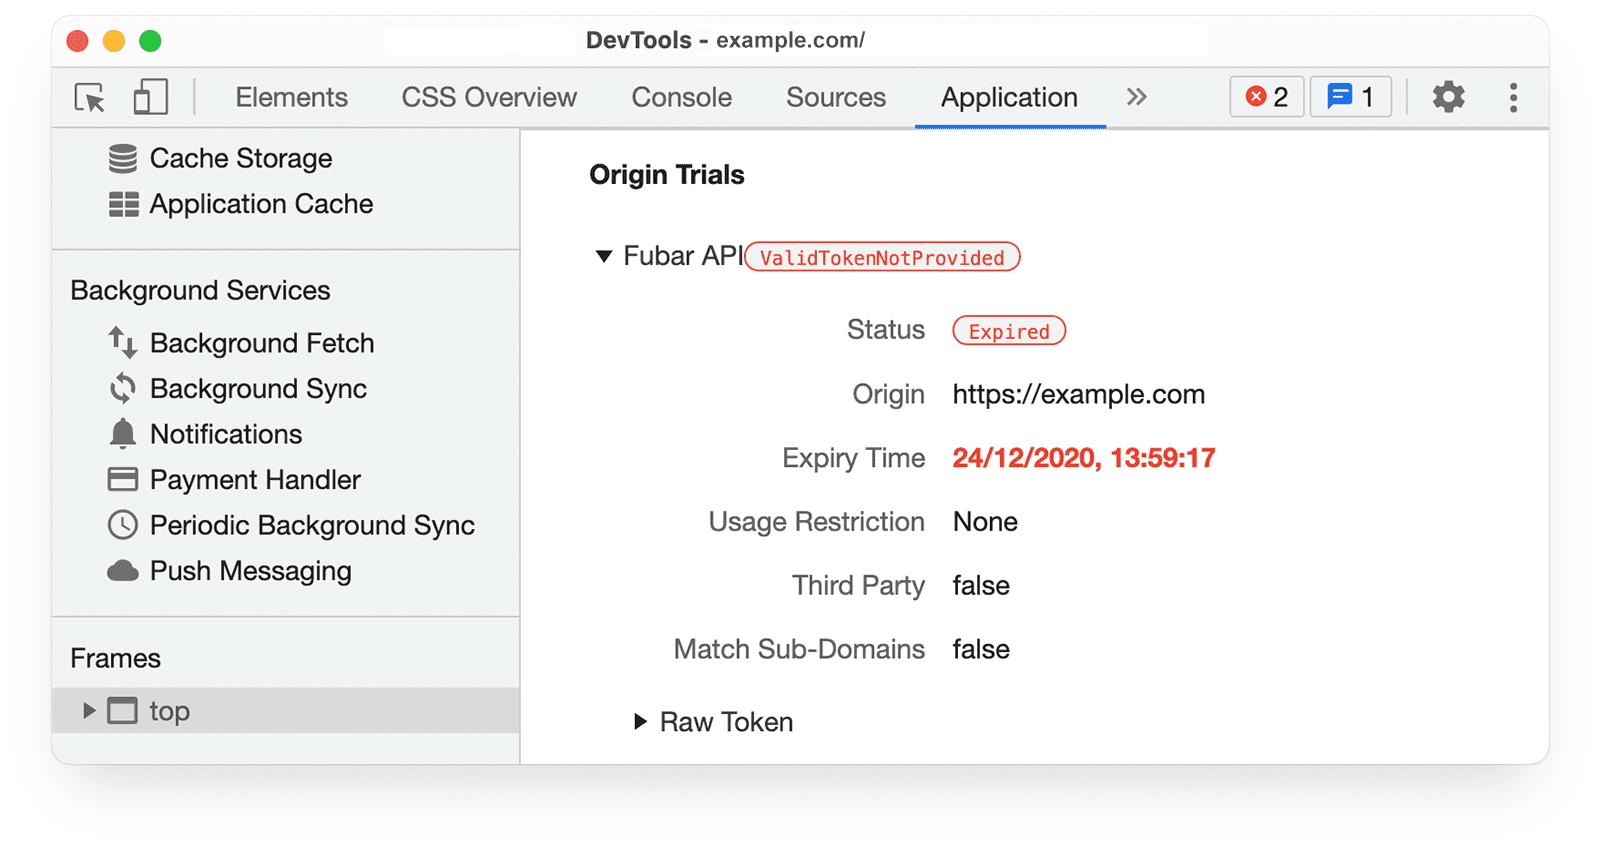 [Application] パネルに「ValidTokenNotProvided」と「Status Expired」と示されている Chrome DevTools のオリジン トライアルの情報